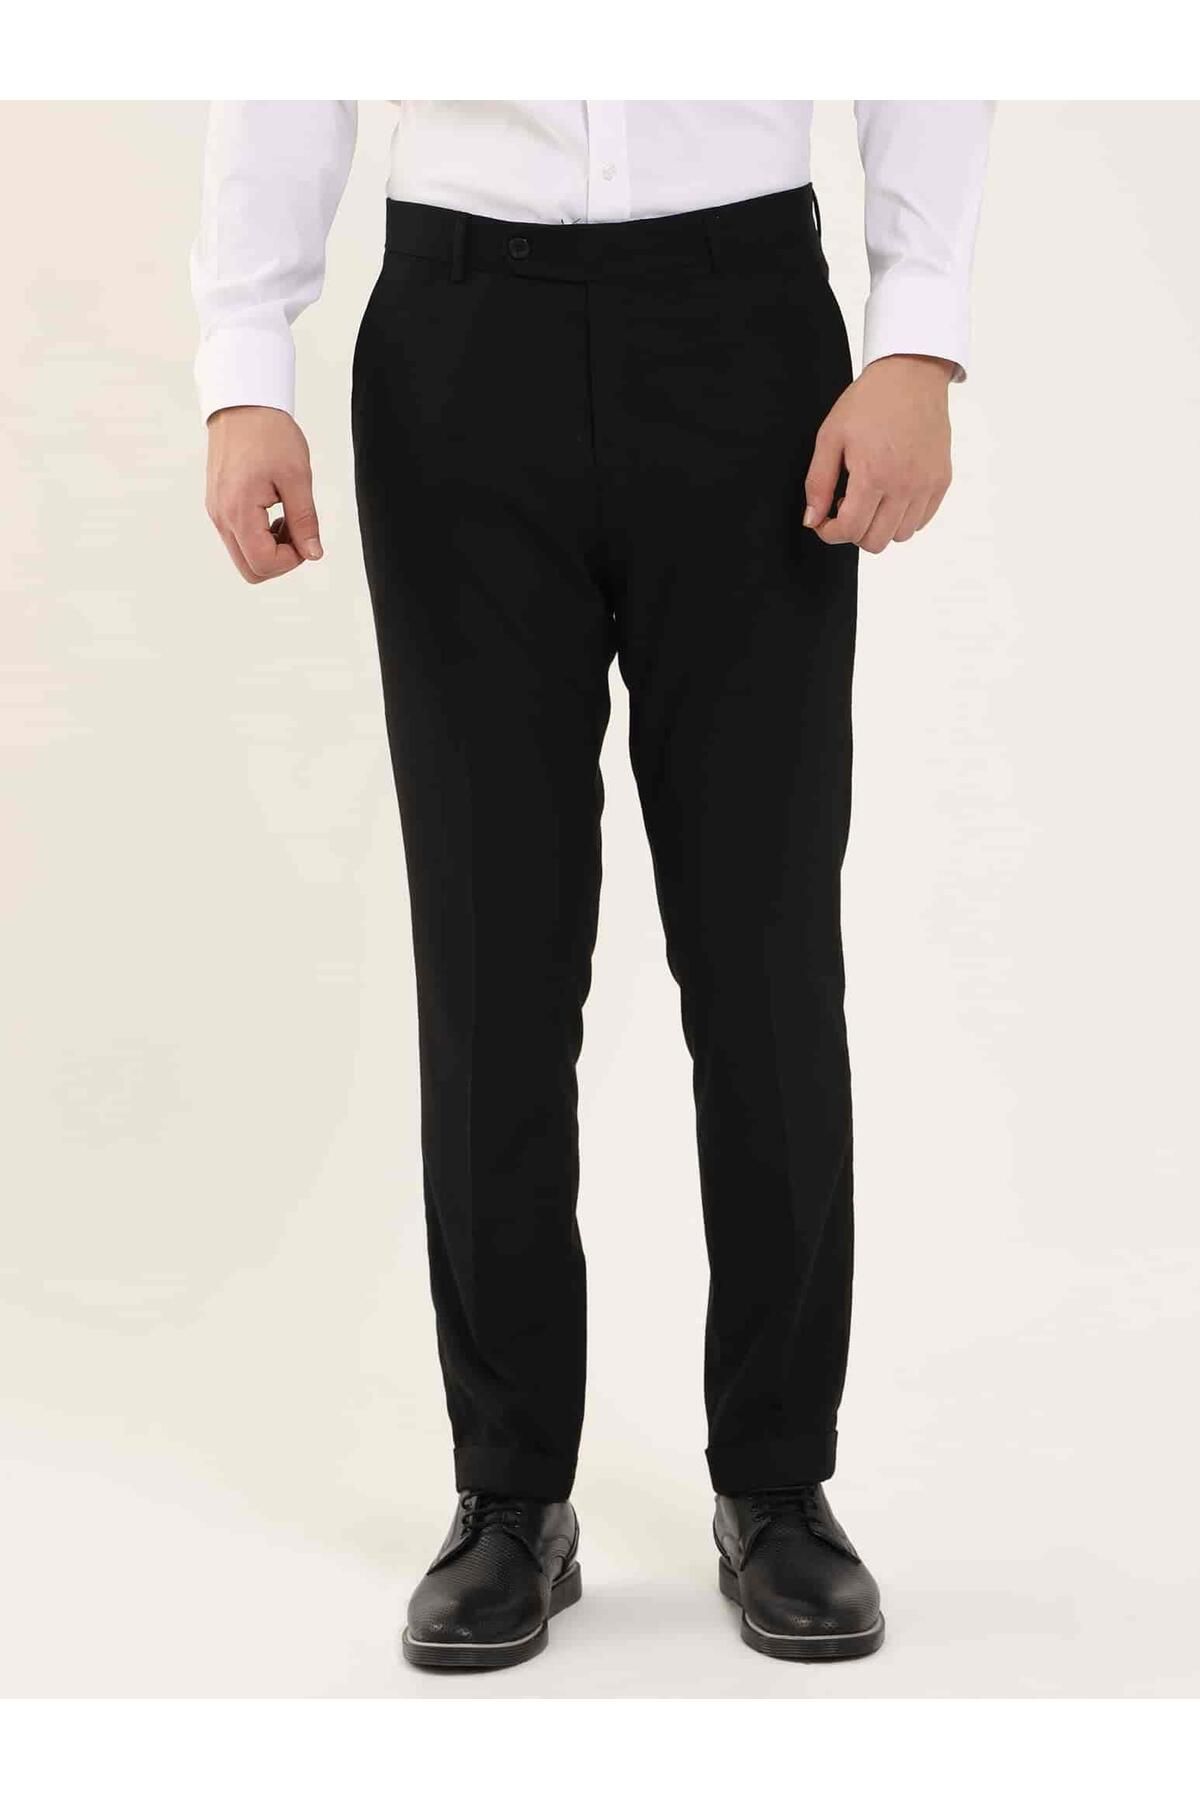 Dufy Siyah Erkek Regular Fit Düz Klasik Pantolon - 97746